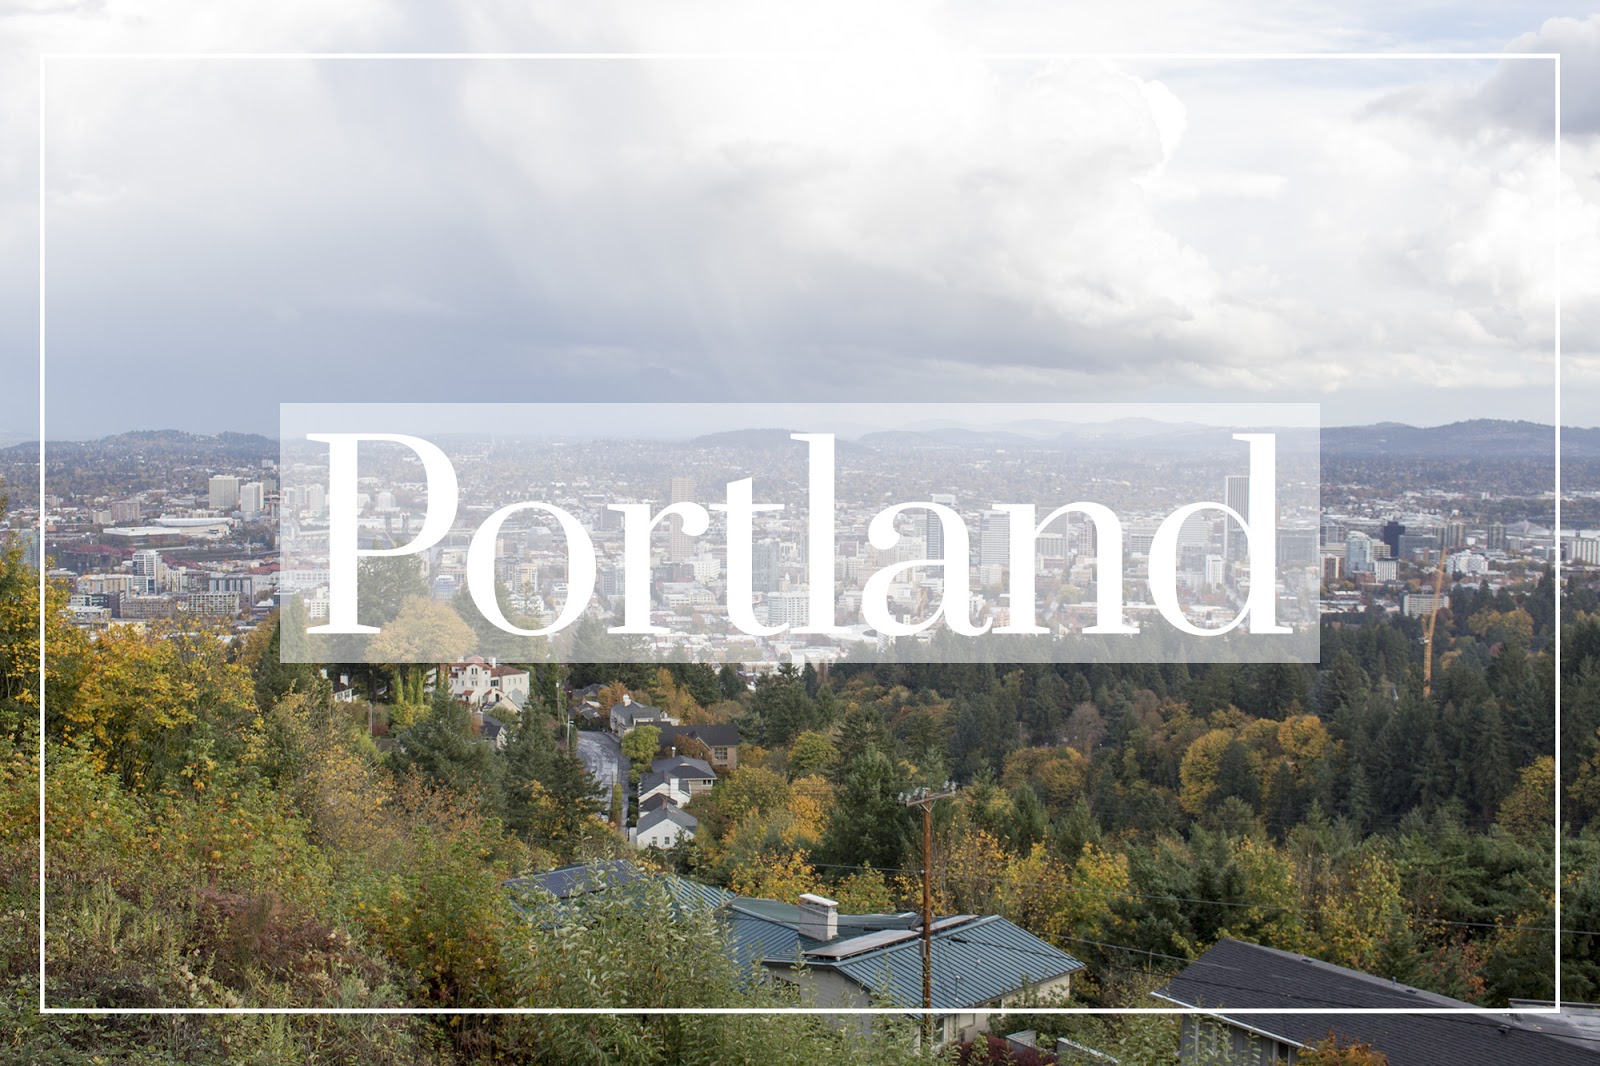 City guide voyage Portland USA